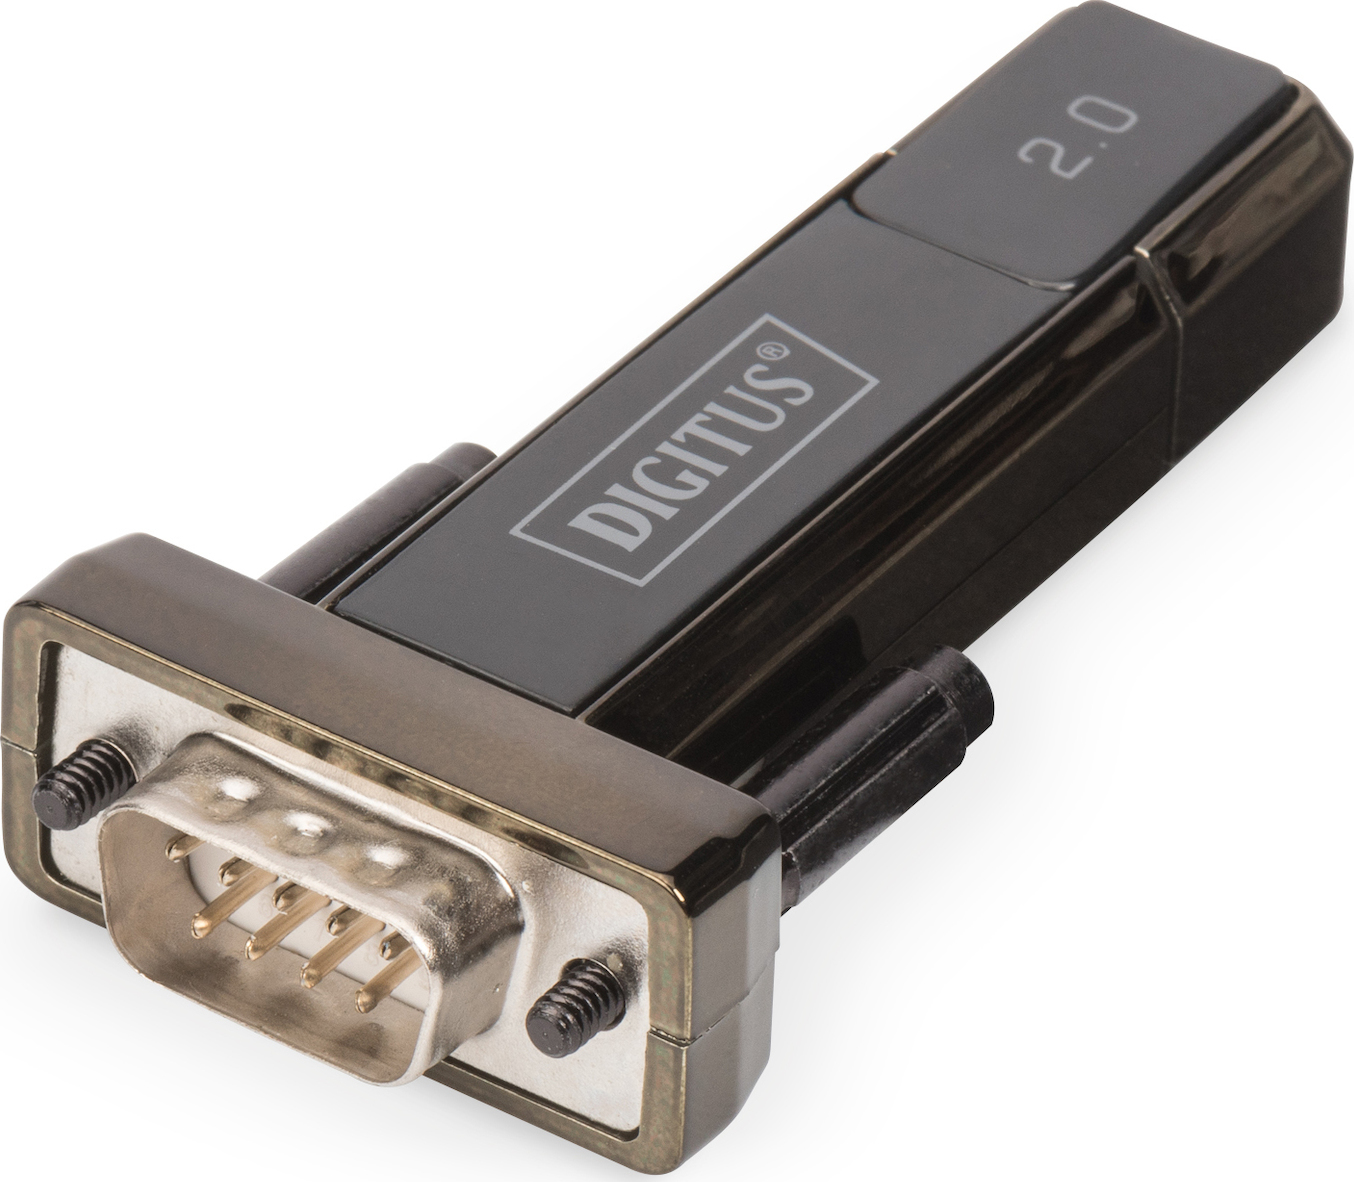 Adaptador de USB a serie Digitus DA-70167 (V2.0) con cable de 0,8 m